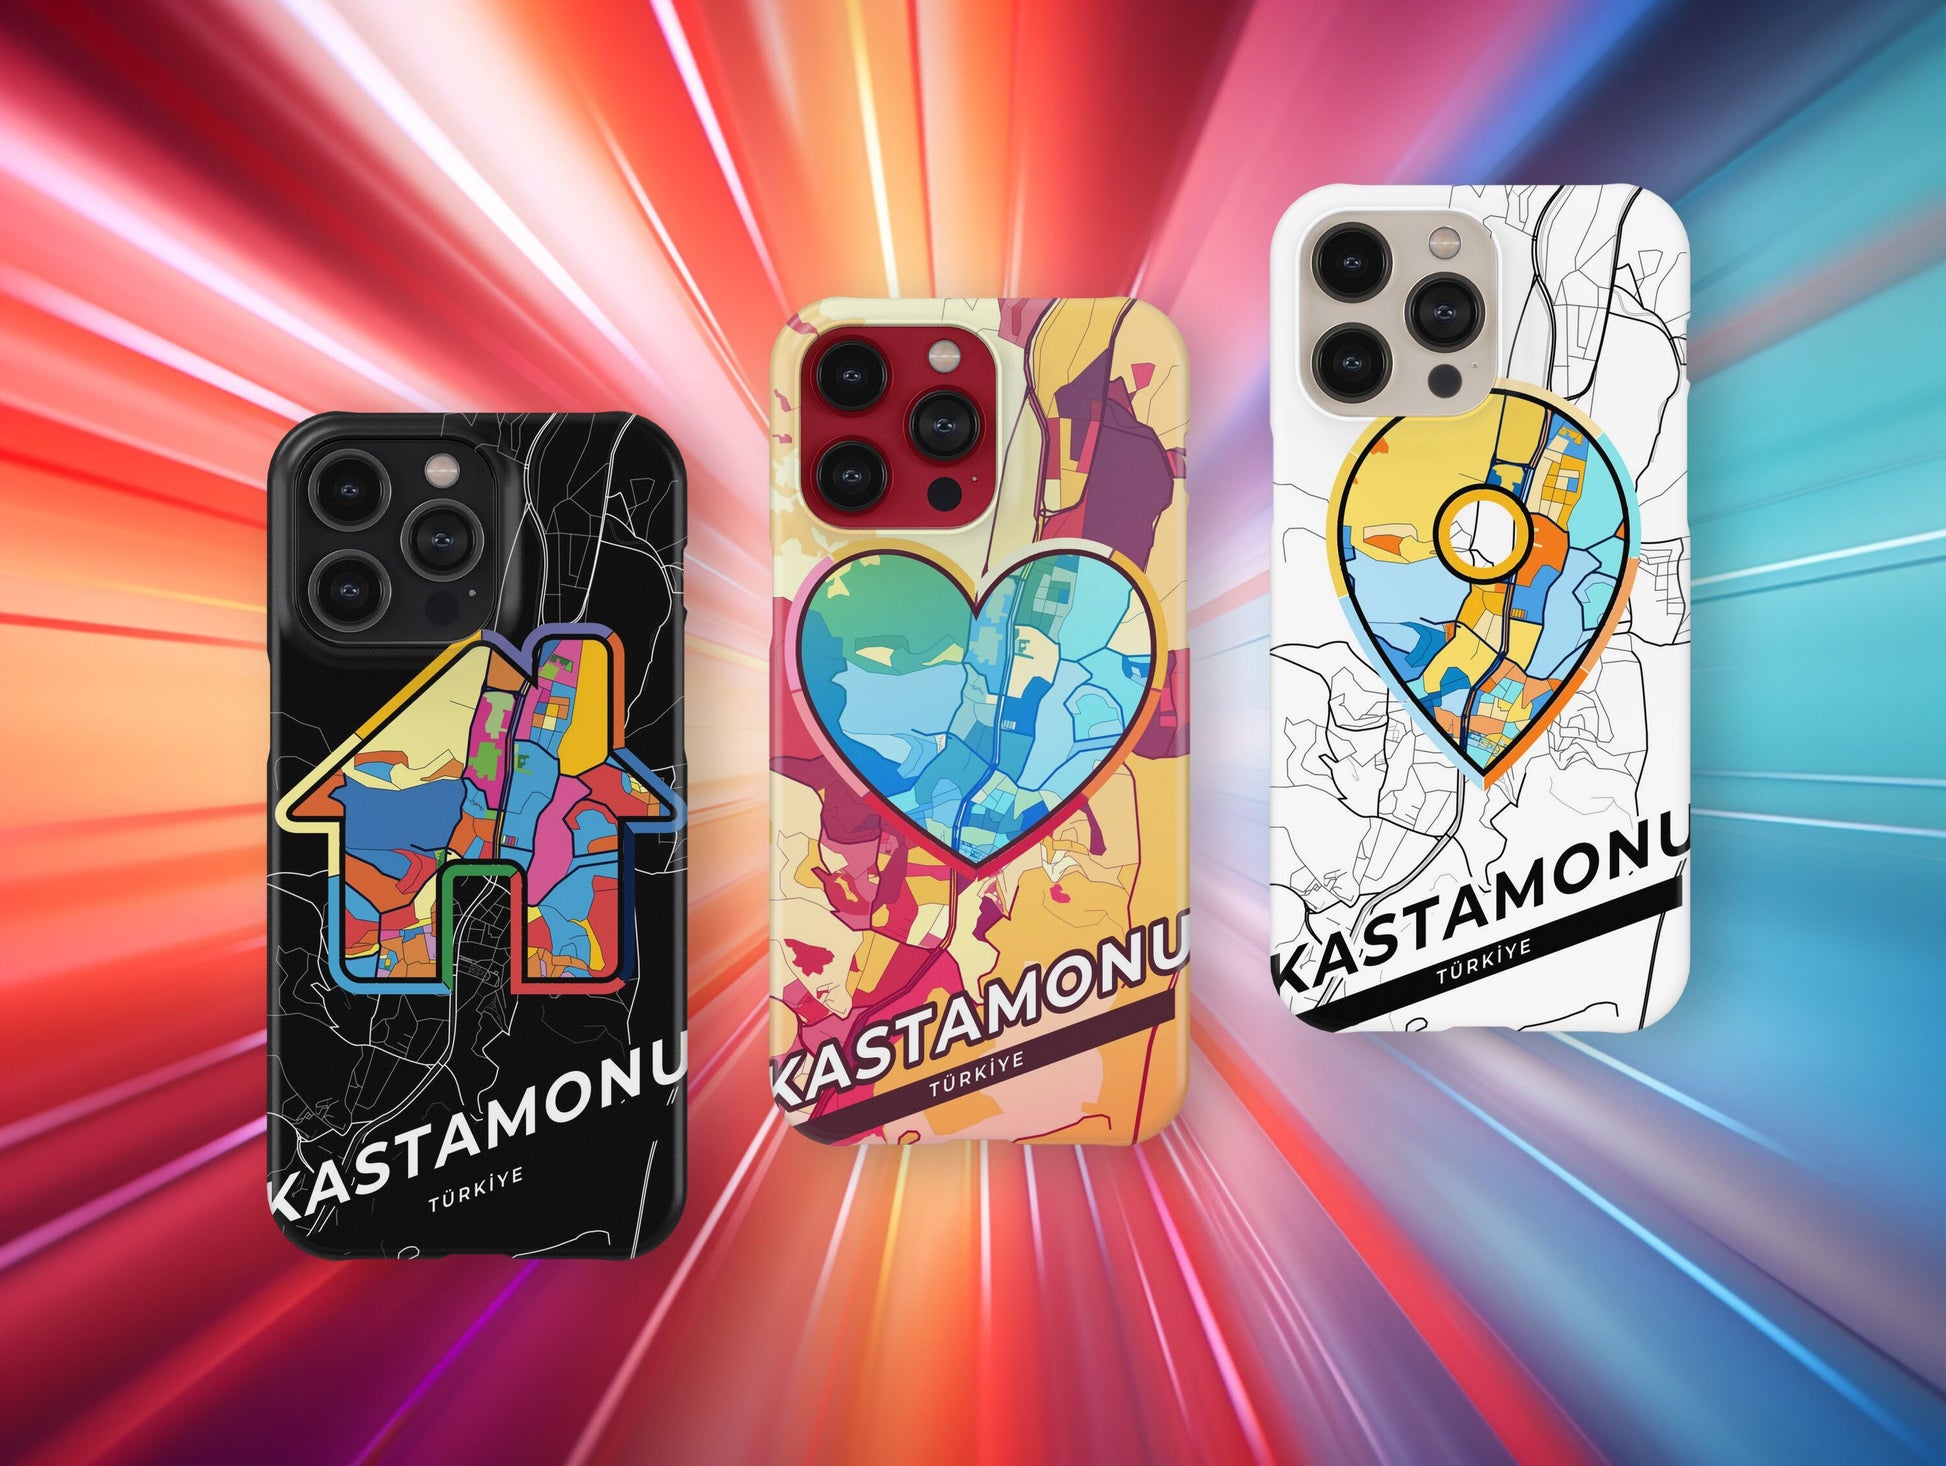 Kastamonu Turkey slim phone case with colorful icon. Birthday, wedding or housewarming gift. Couple match cases.